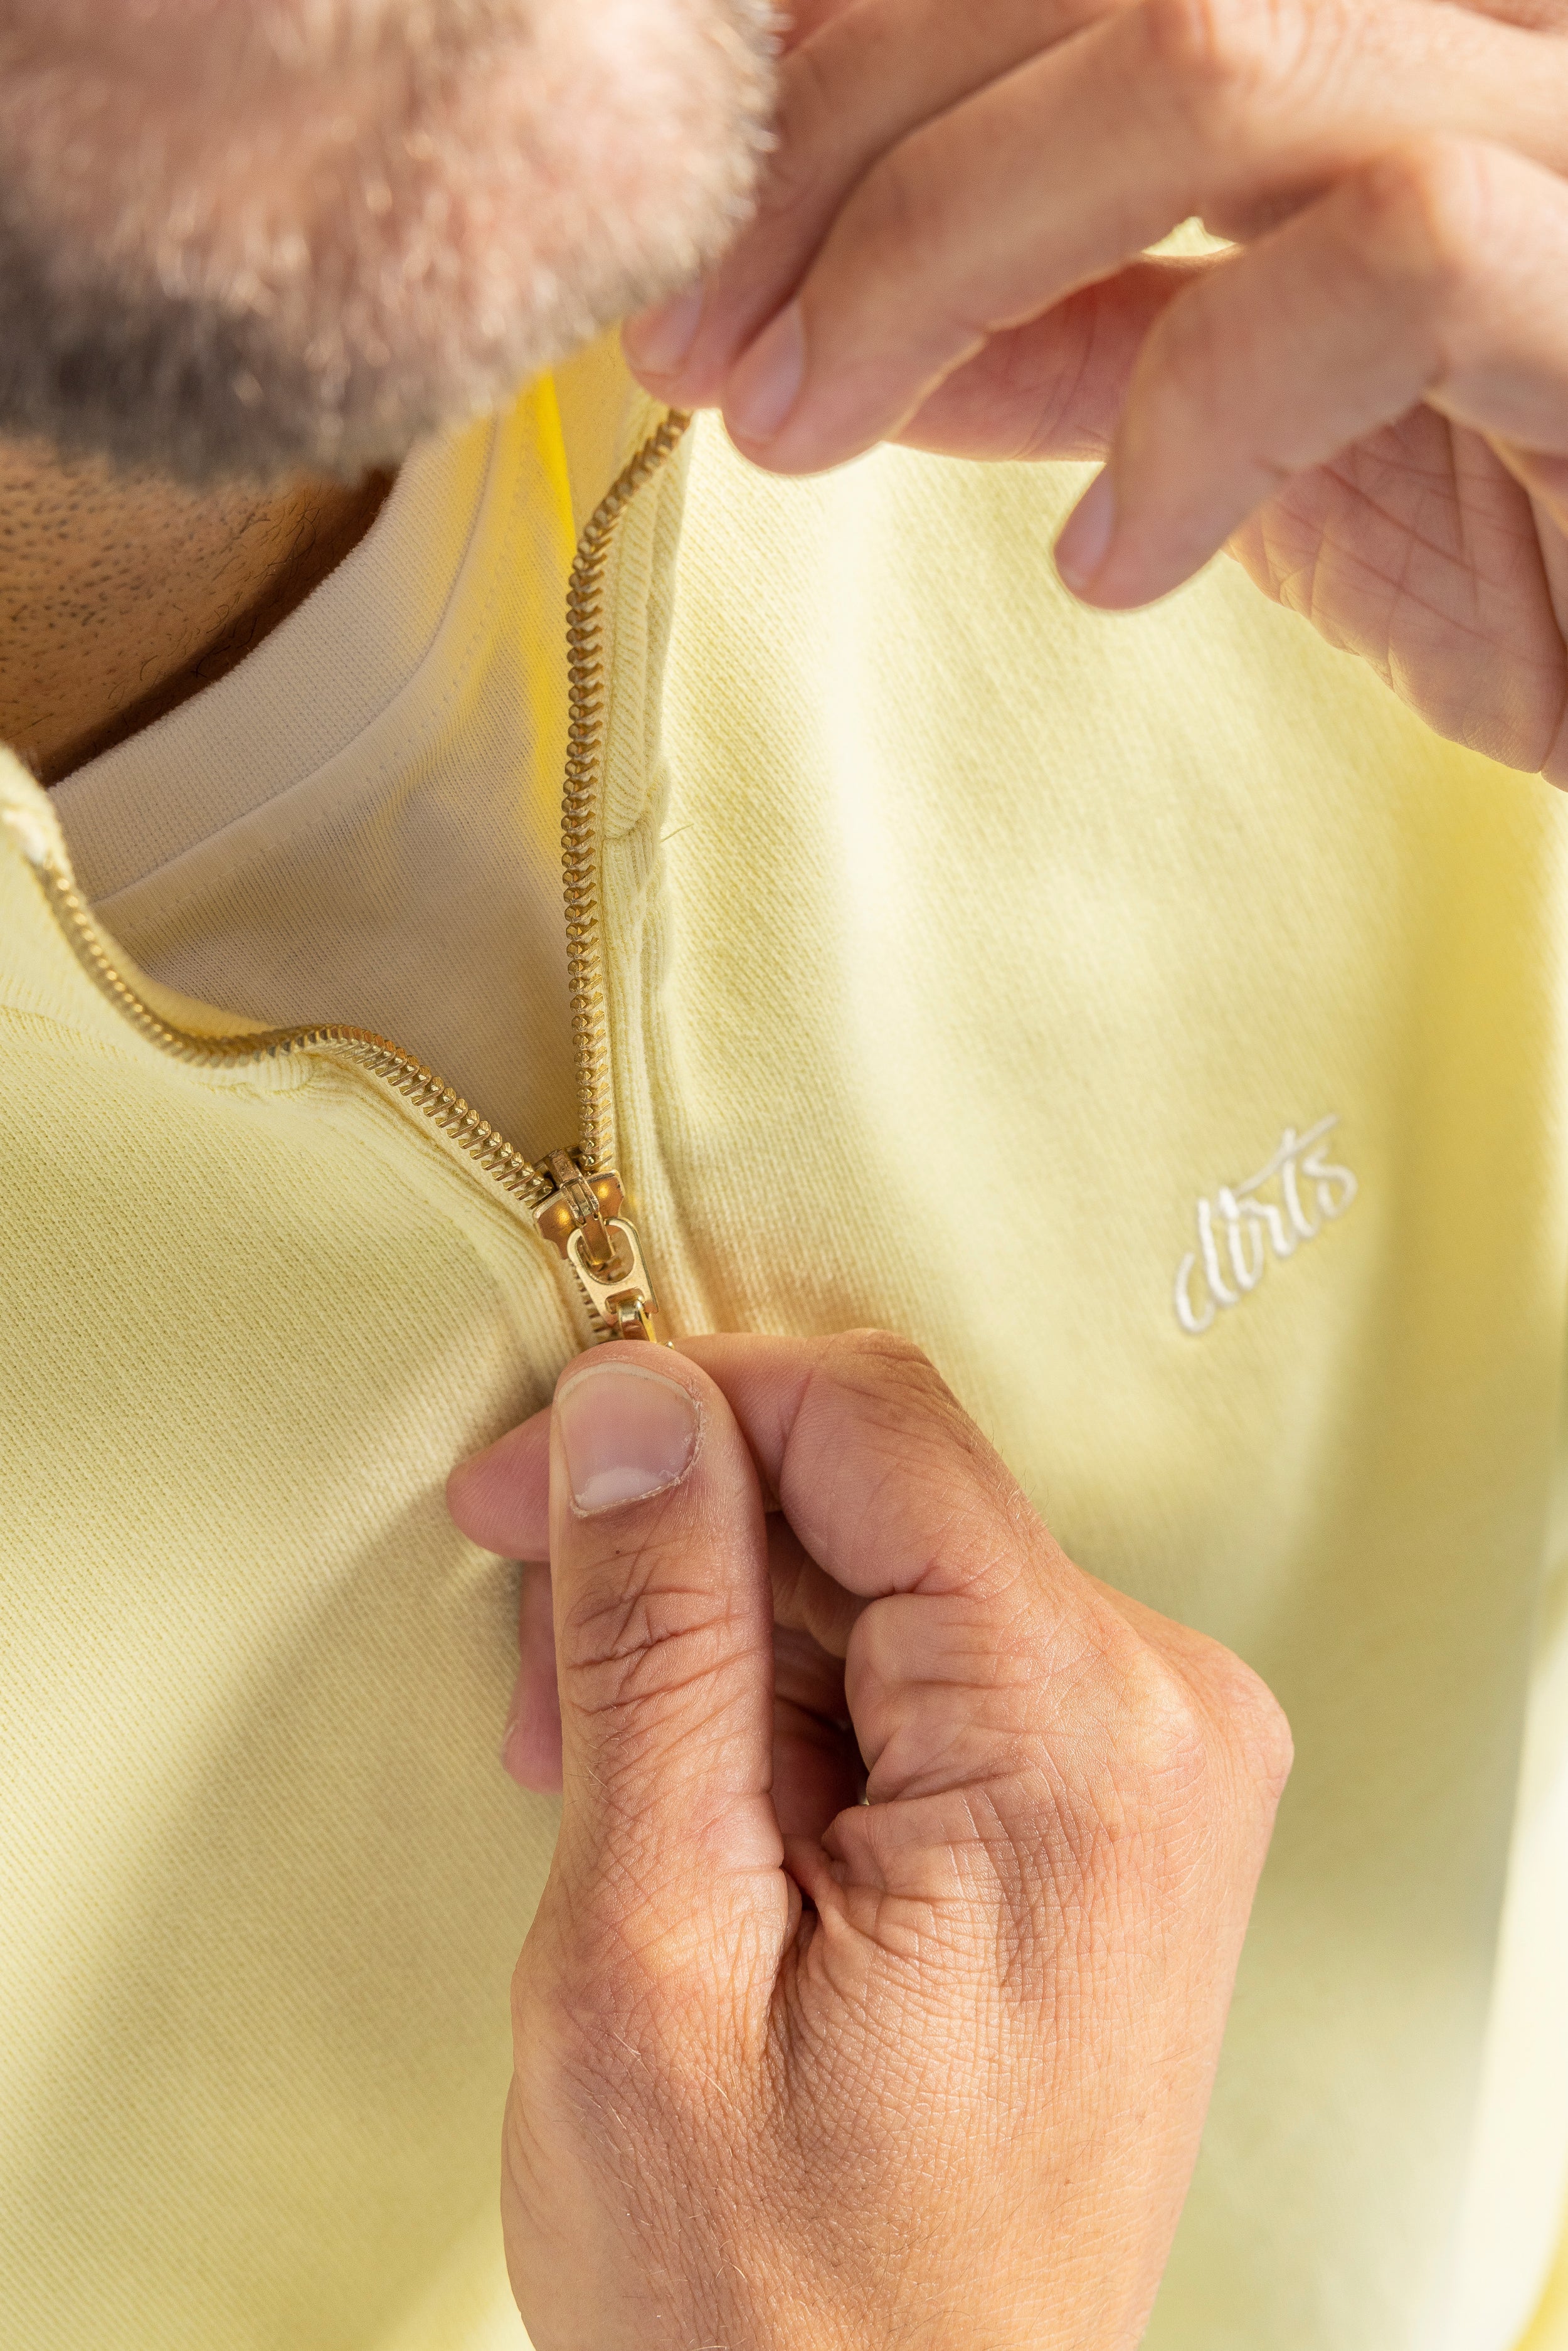 Yellow sweater quarter zip raglan made of 100% organic cotton from DIRTS